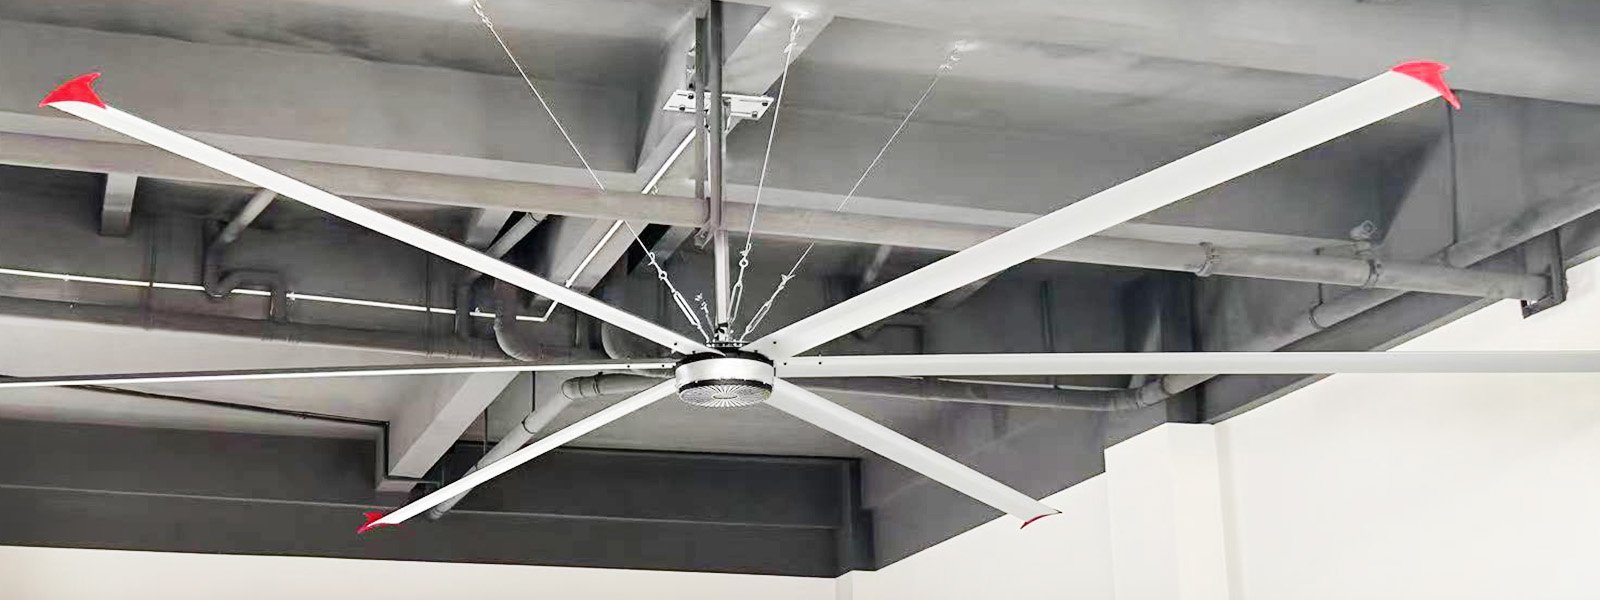 Ceiling-mounted HVLS PMSM large fans